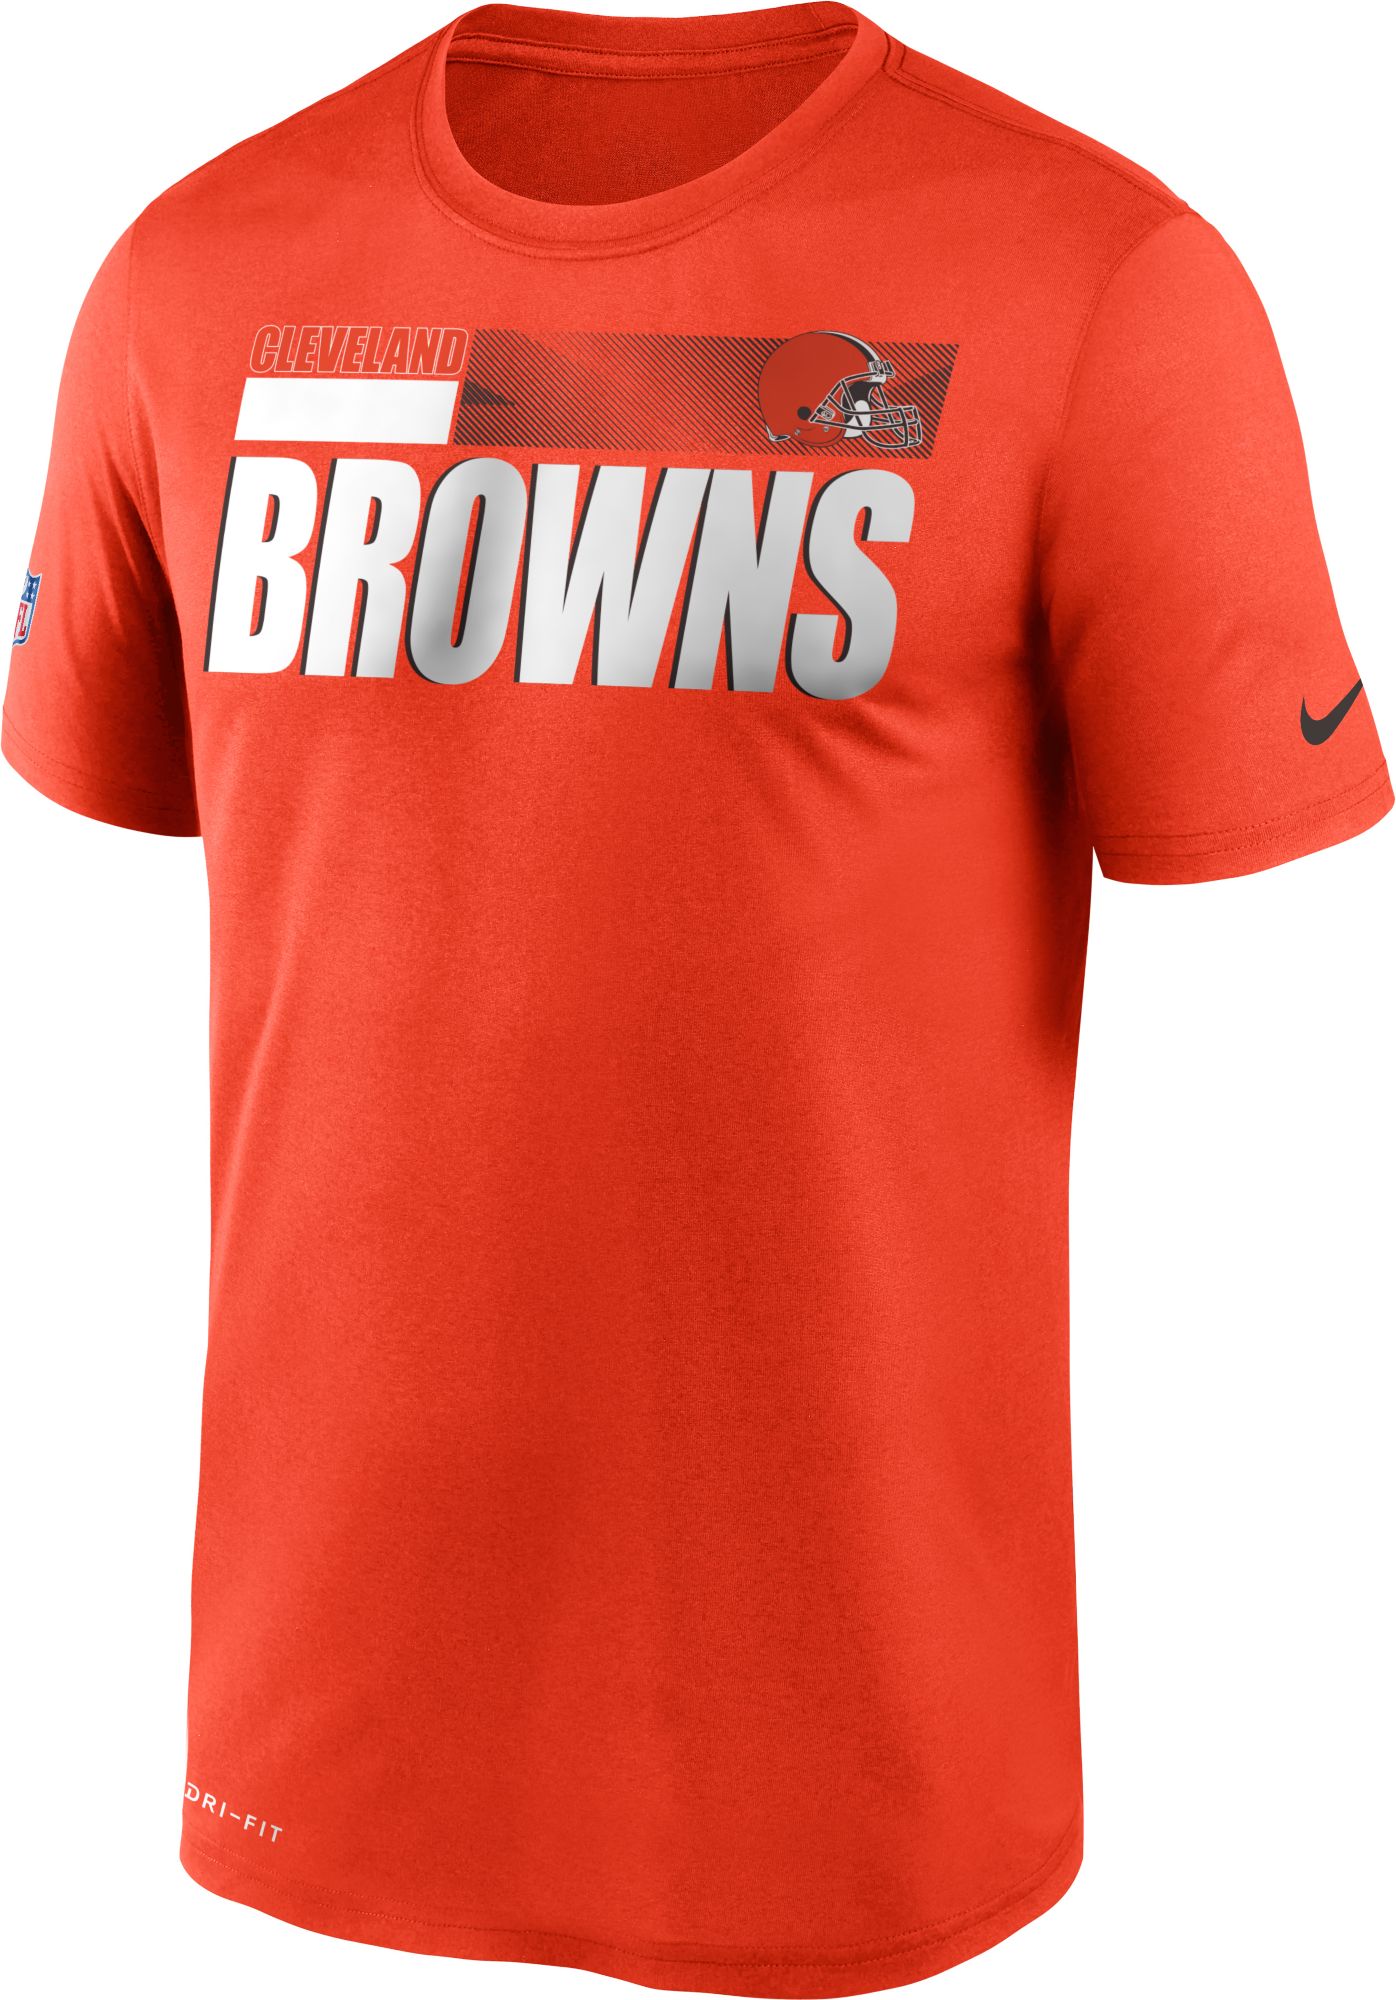 browns nike shirt